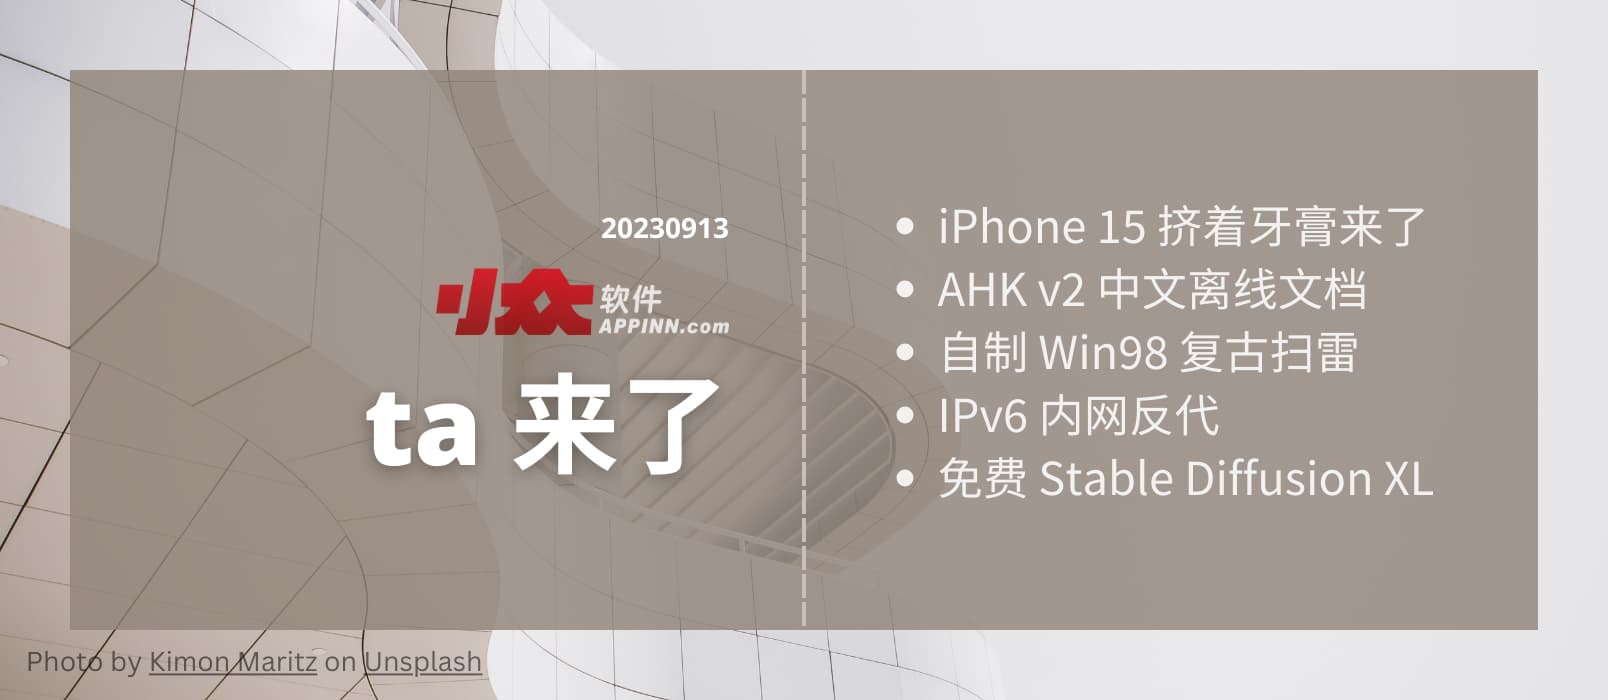 ta 来了2：iPhone 15 挤着牙膏来了、AHK v2 中文离线文档、自制 Win98 复古扫雷、IPv6 内网反代、免费 Stable Diffusio